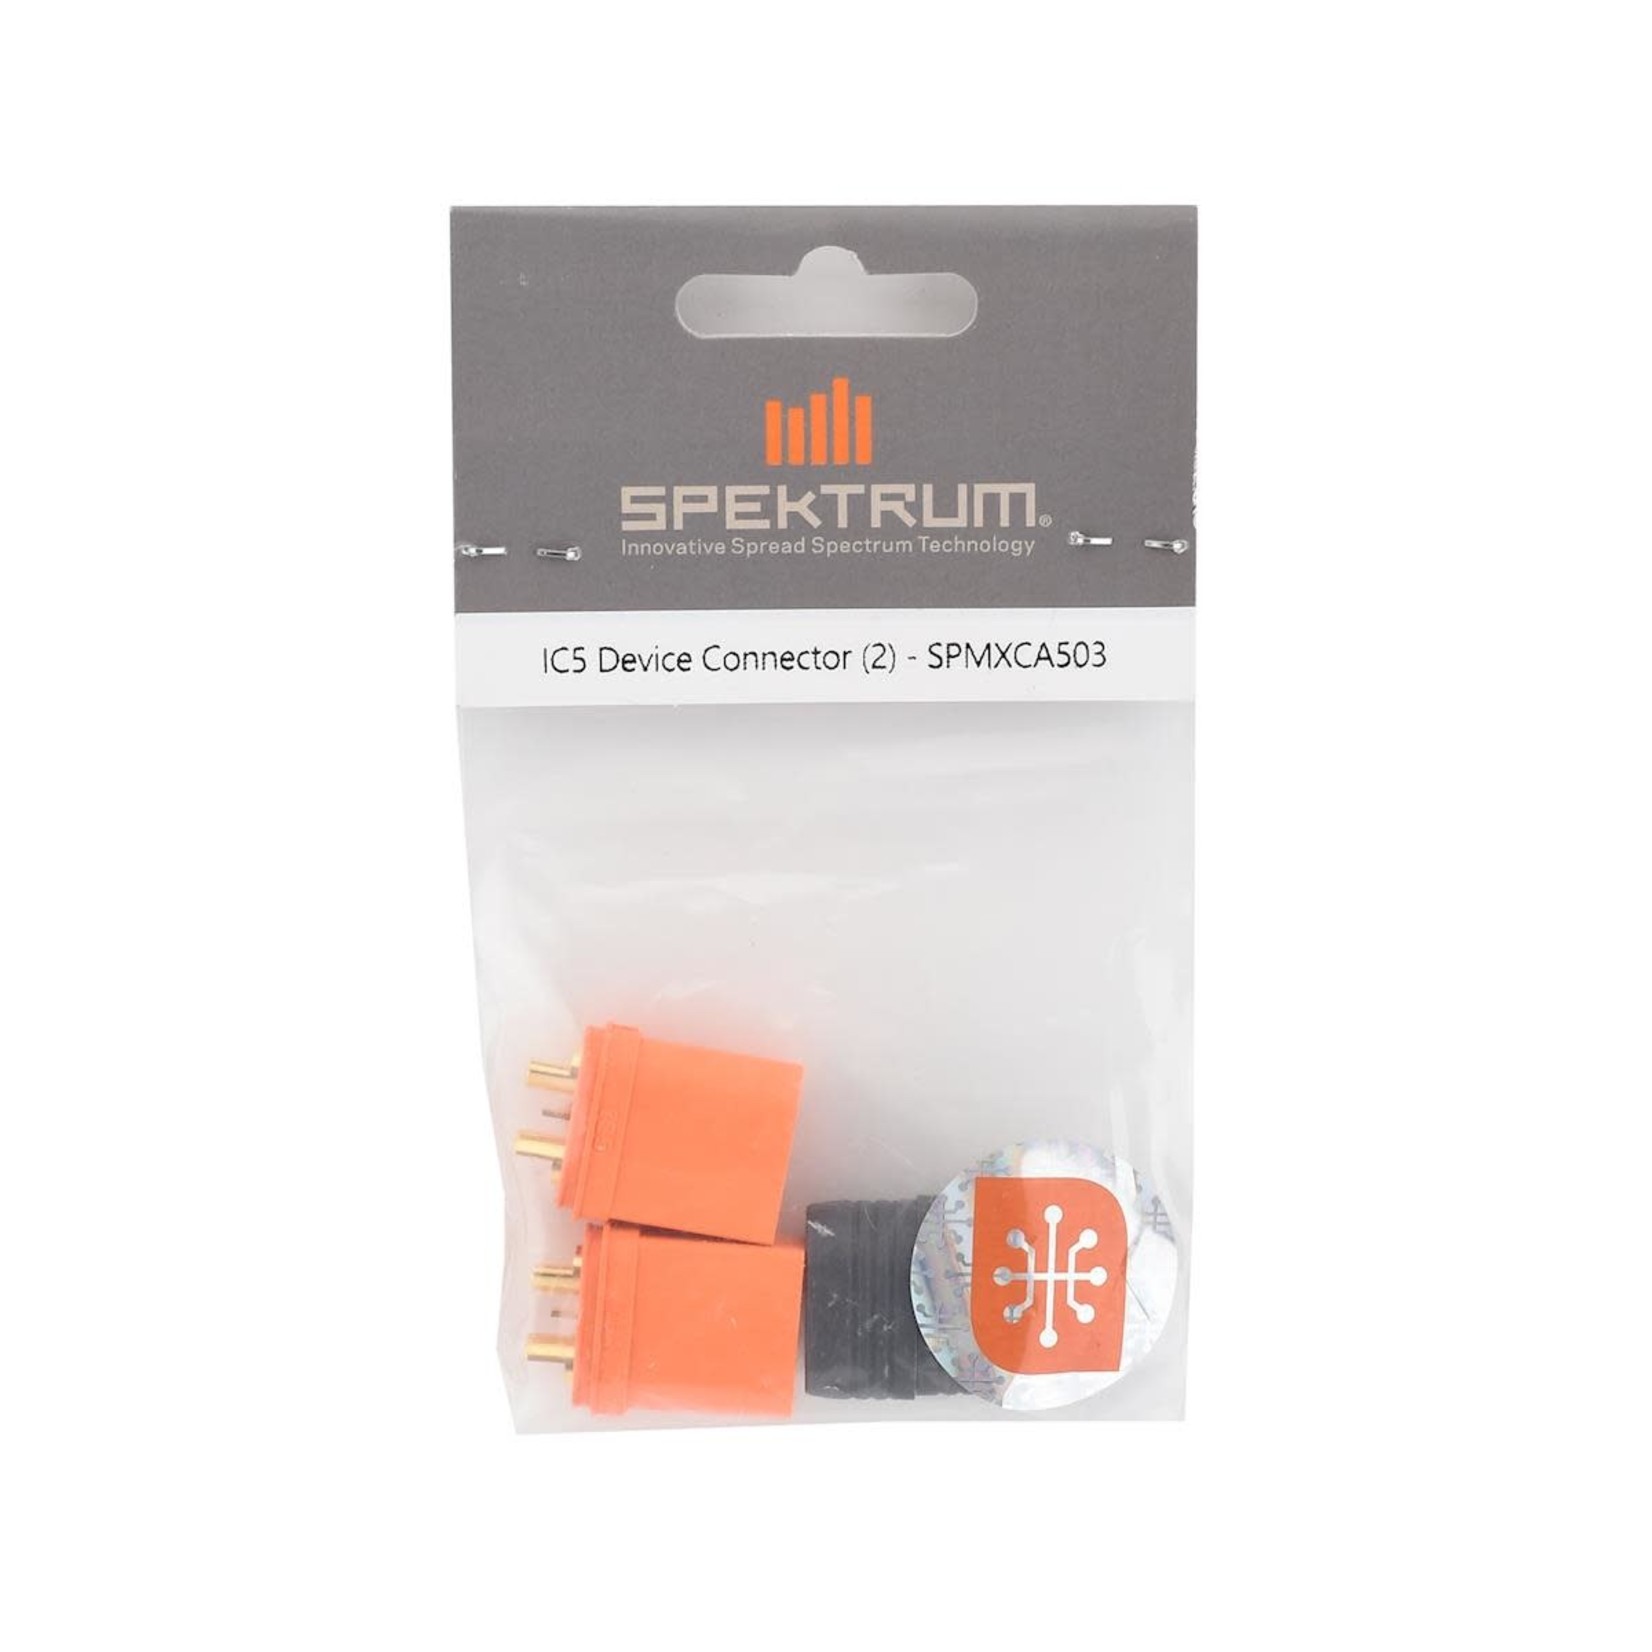 Spektrum Spektrum RC IC5 Device Connector (2) (Male) #SPMXCA503